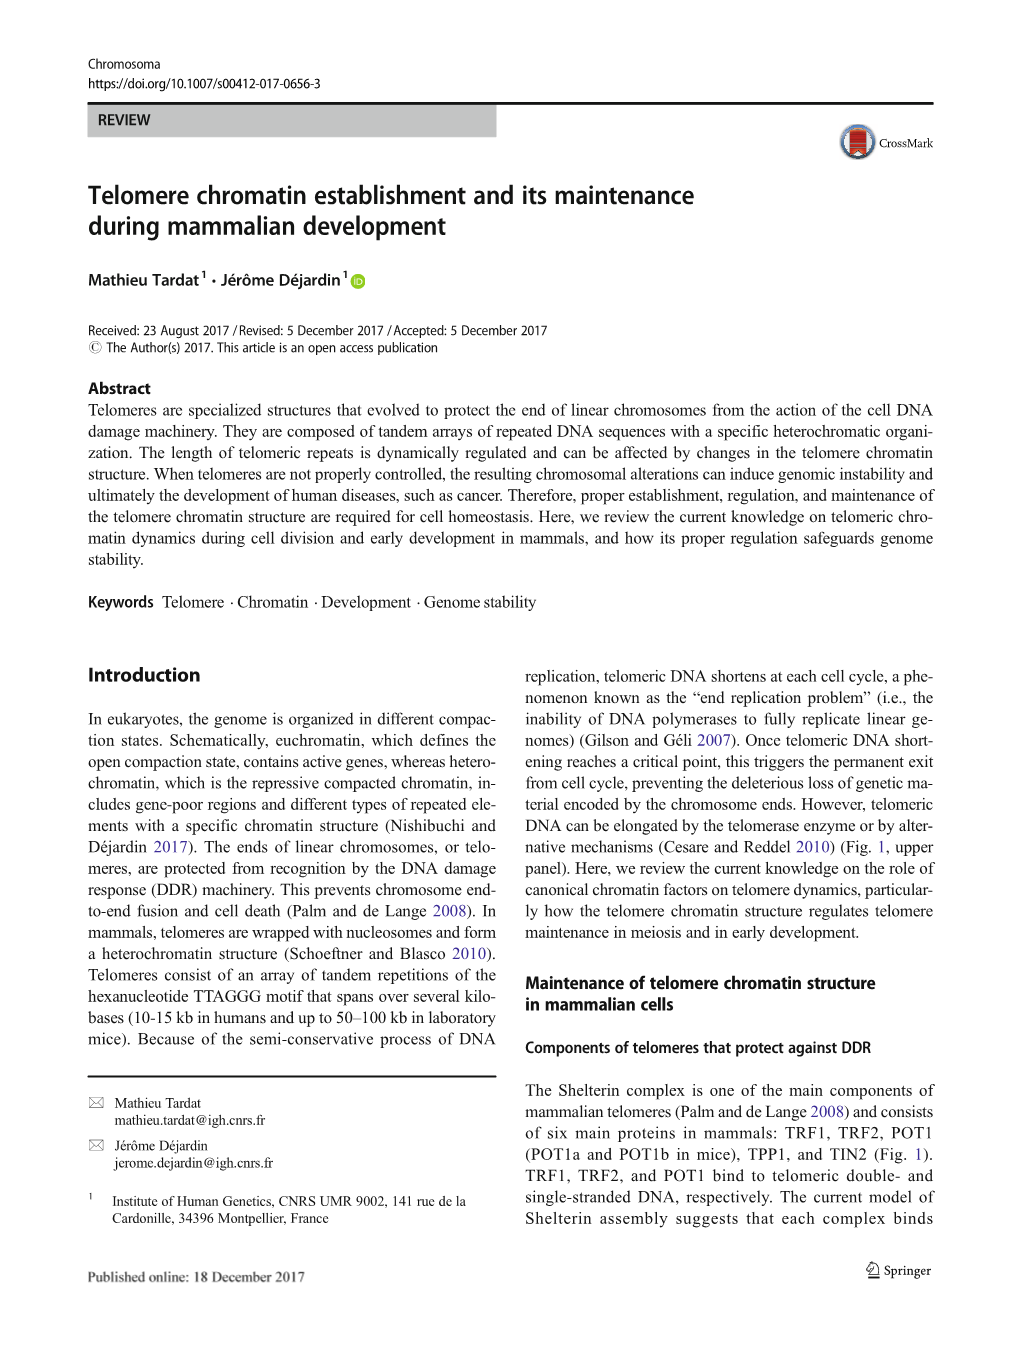 Telomere Chromatin Establishment and Its Maintenance During Mammalian Development